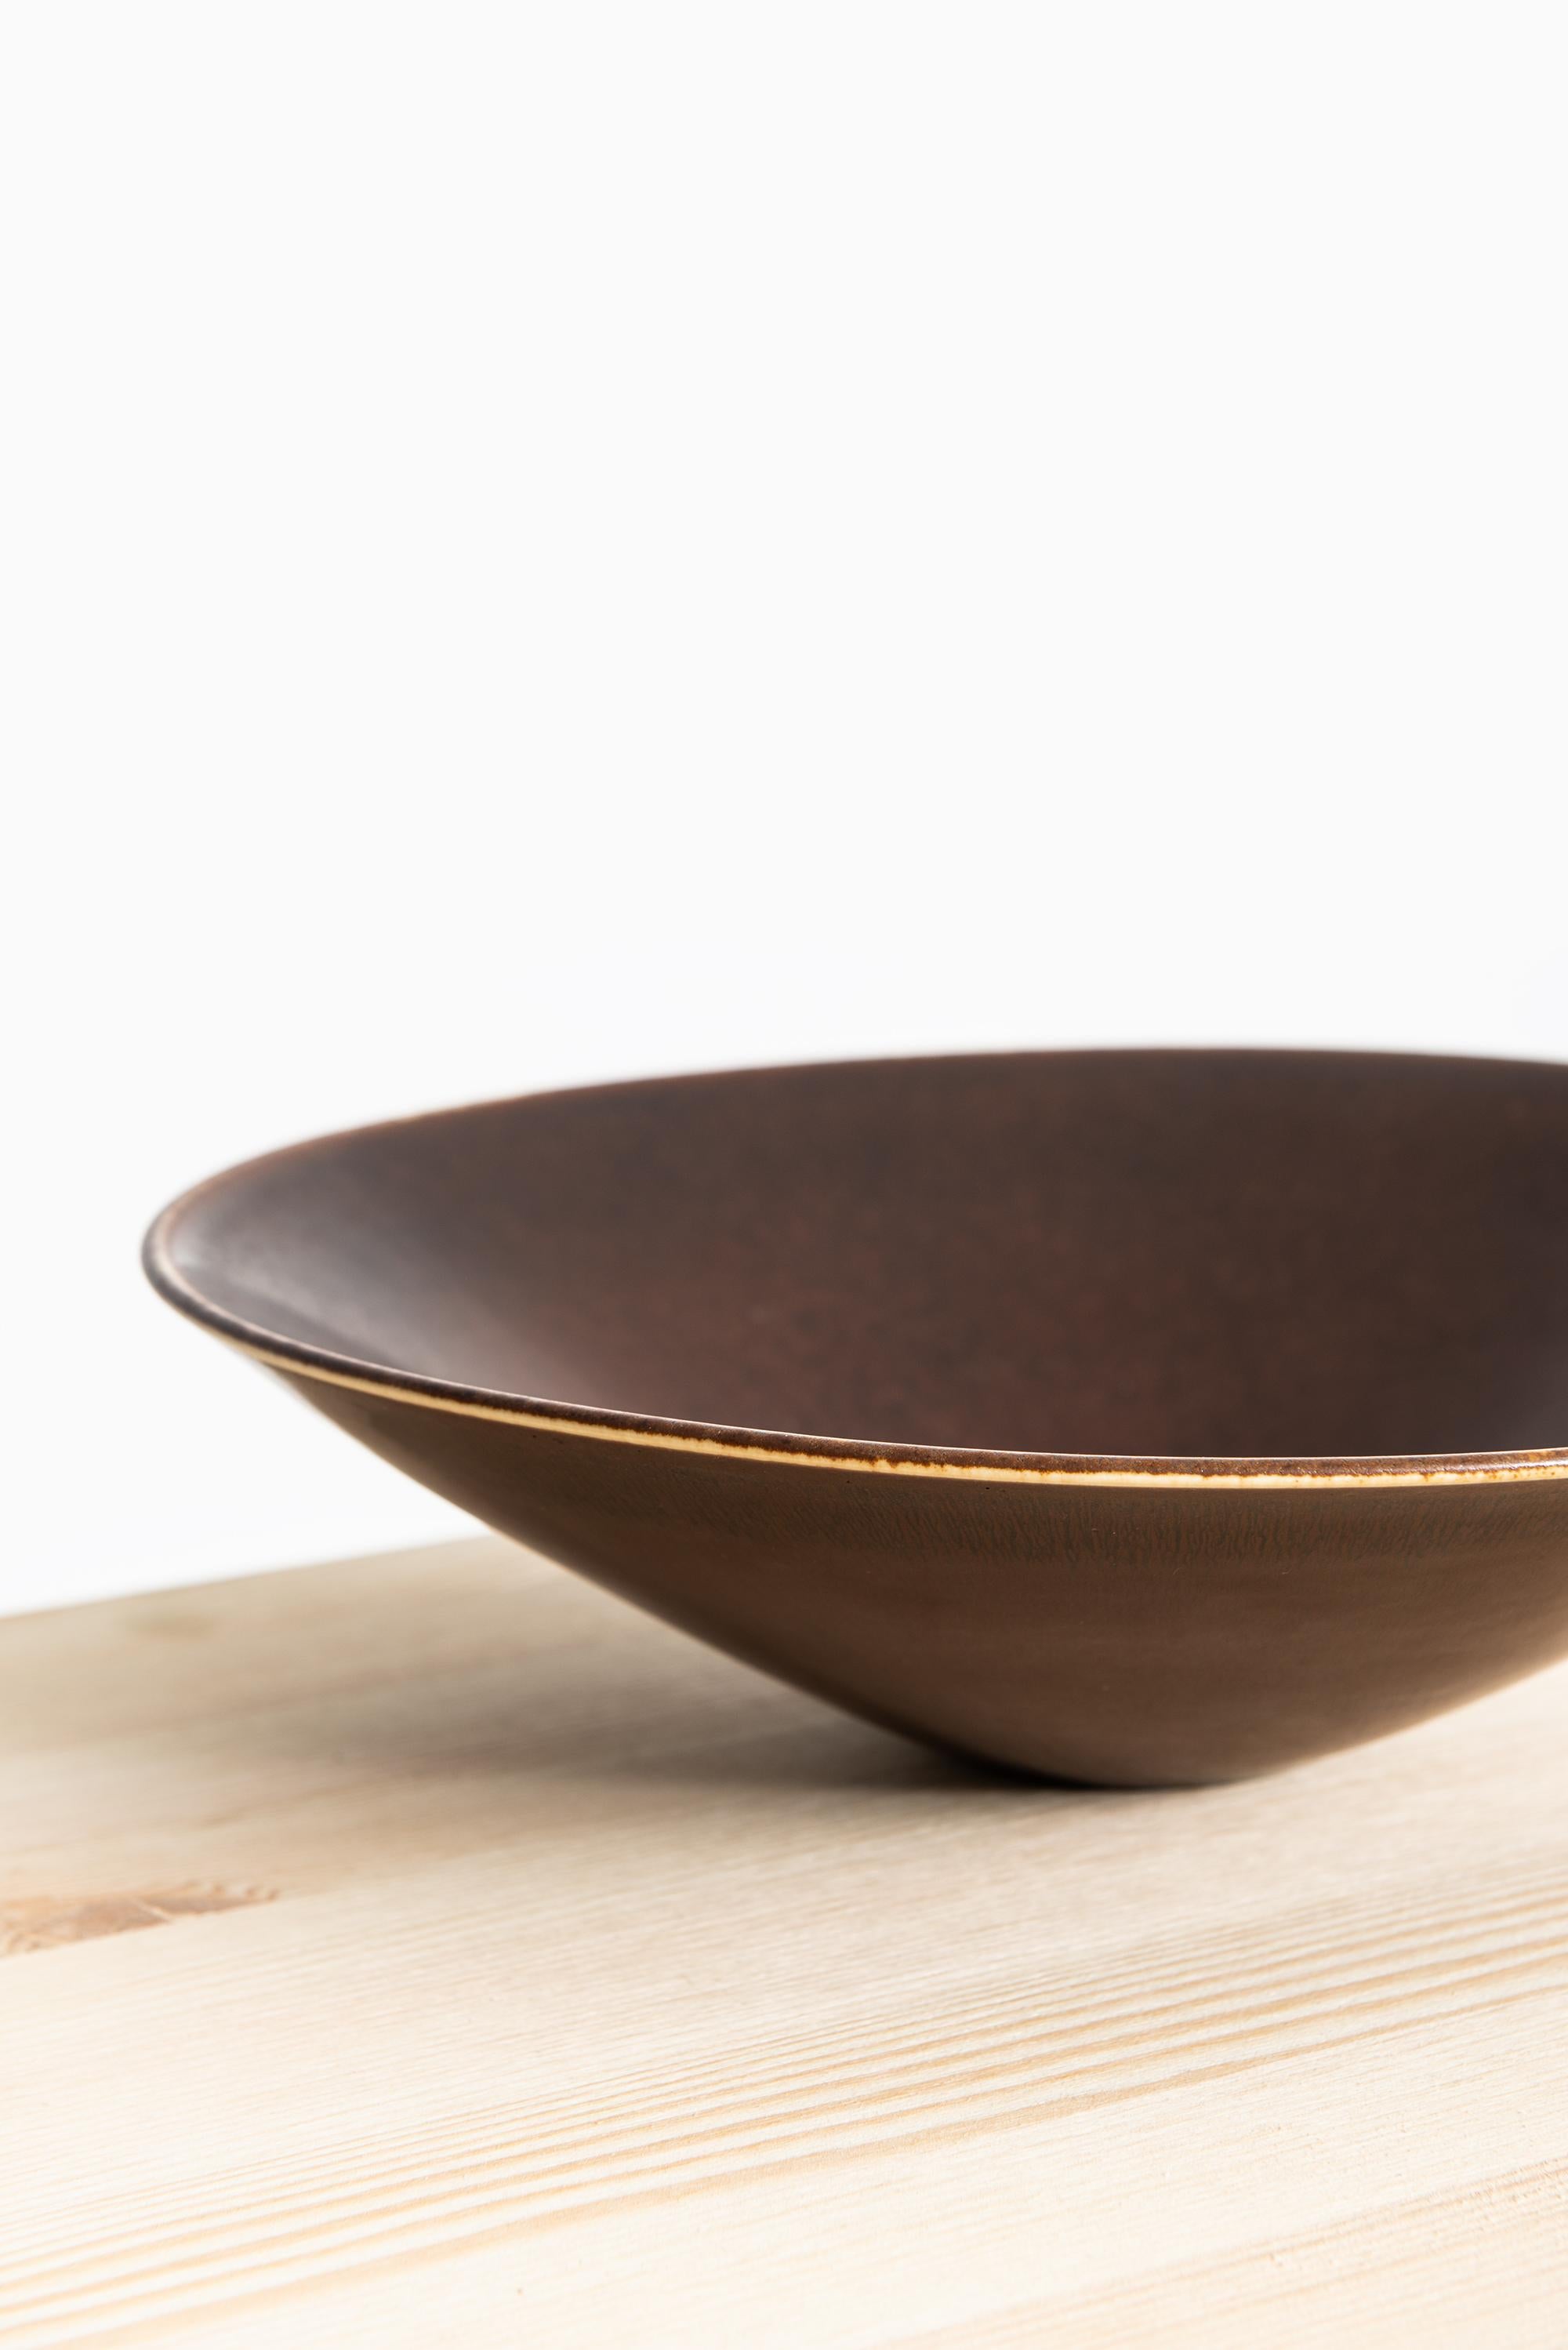 Scandinavian Modern Carl-Harry Stålhane Ceramic Bowl by Rörstrand in Sweden